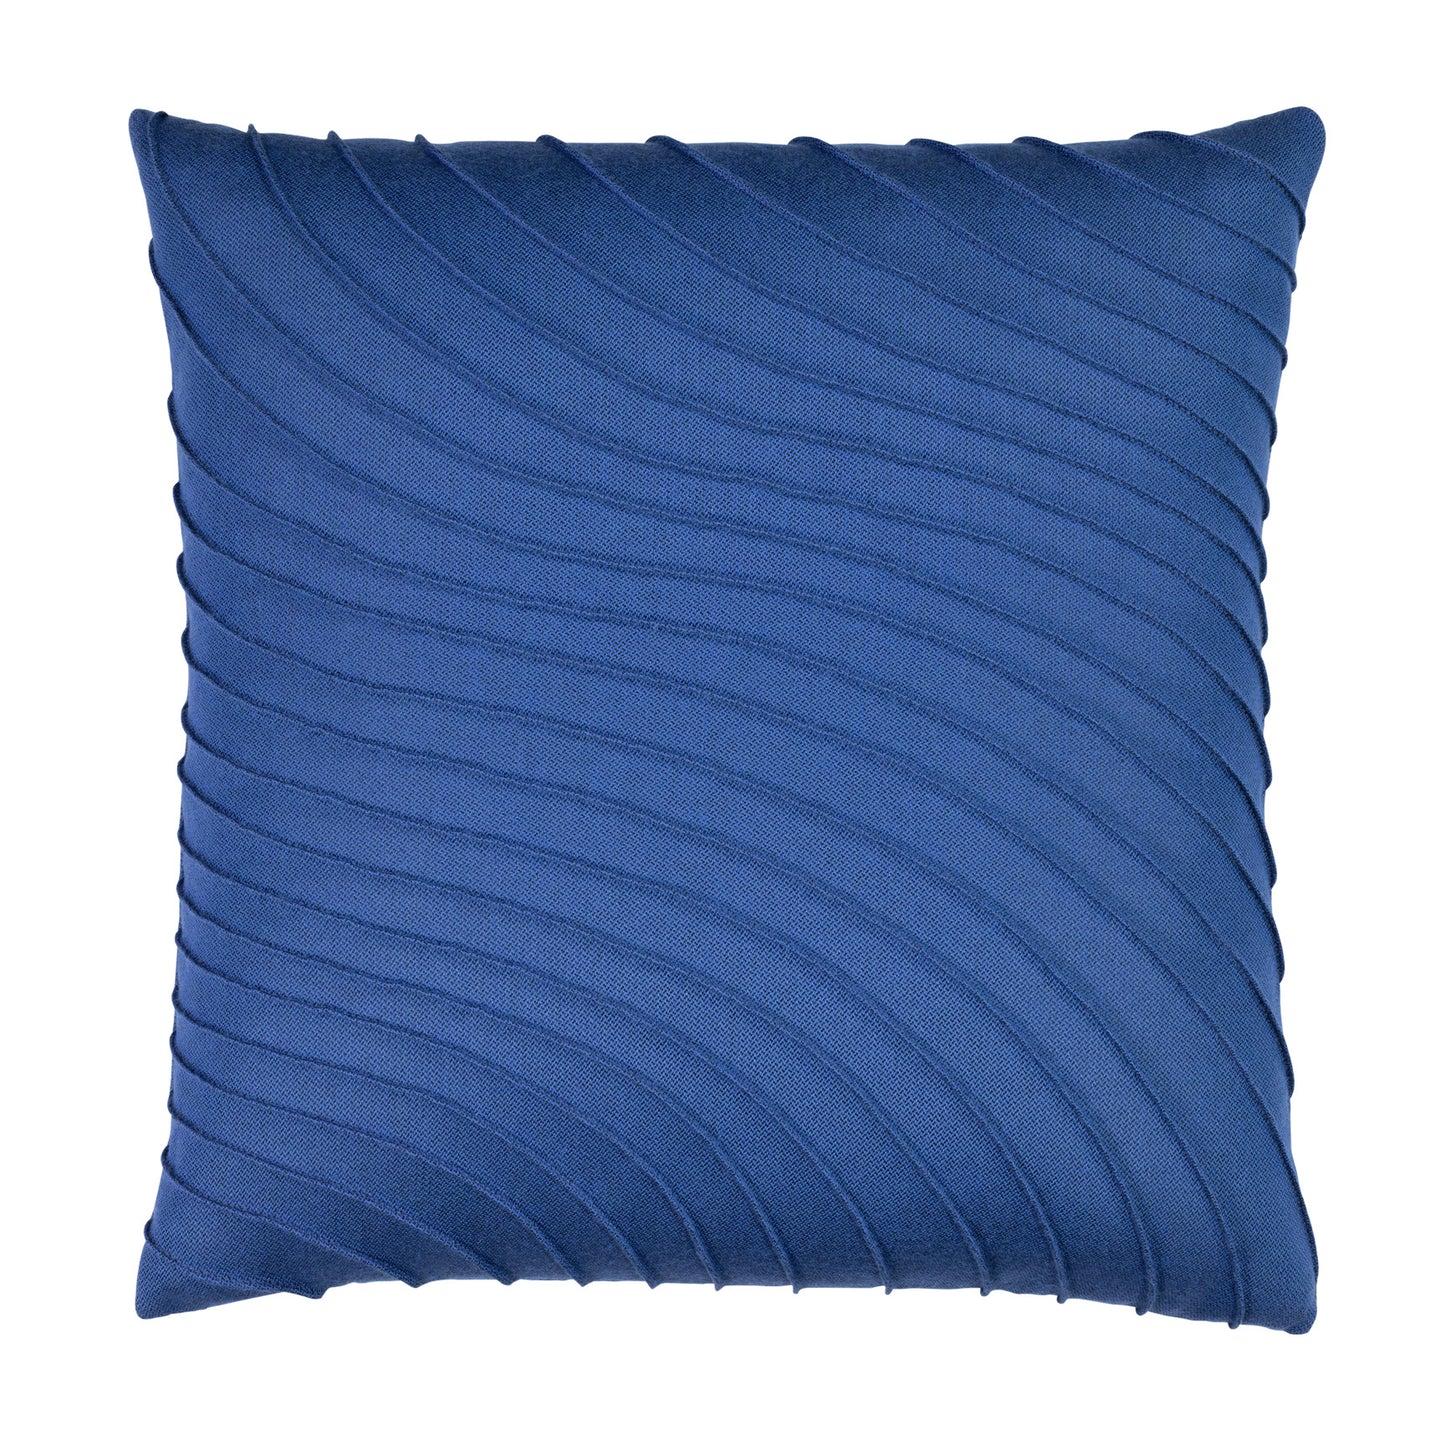 20" Square Elaine Smith Pillow  Tidal Cobalt